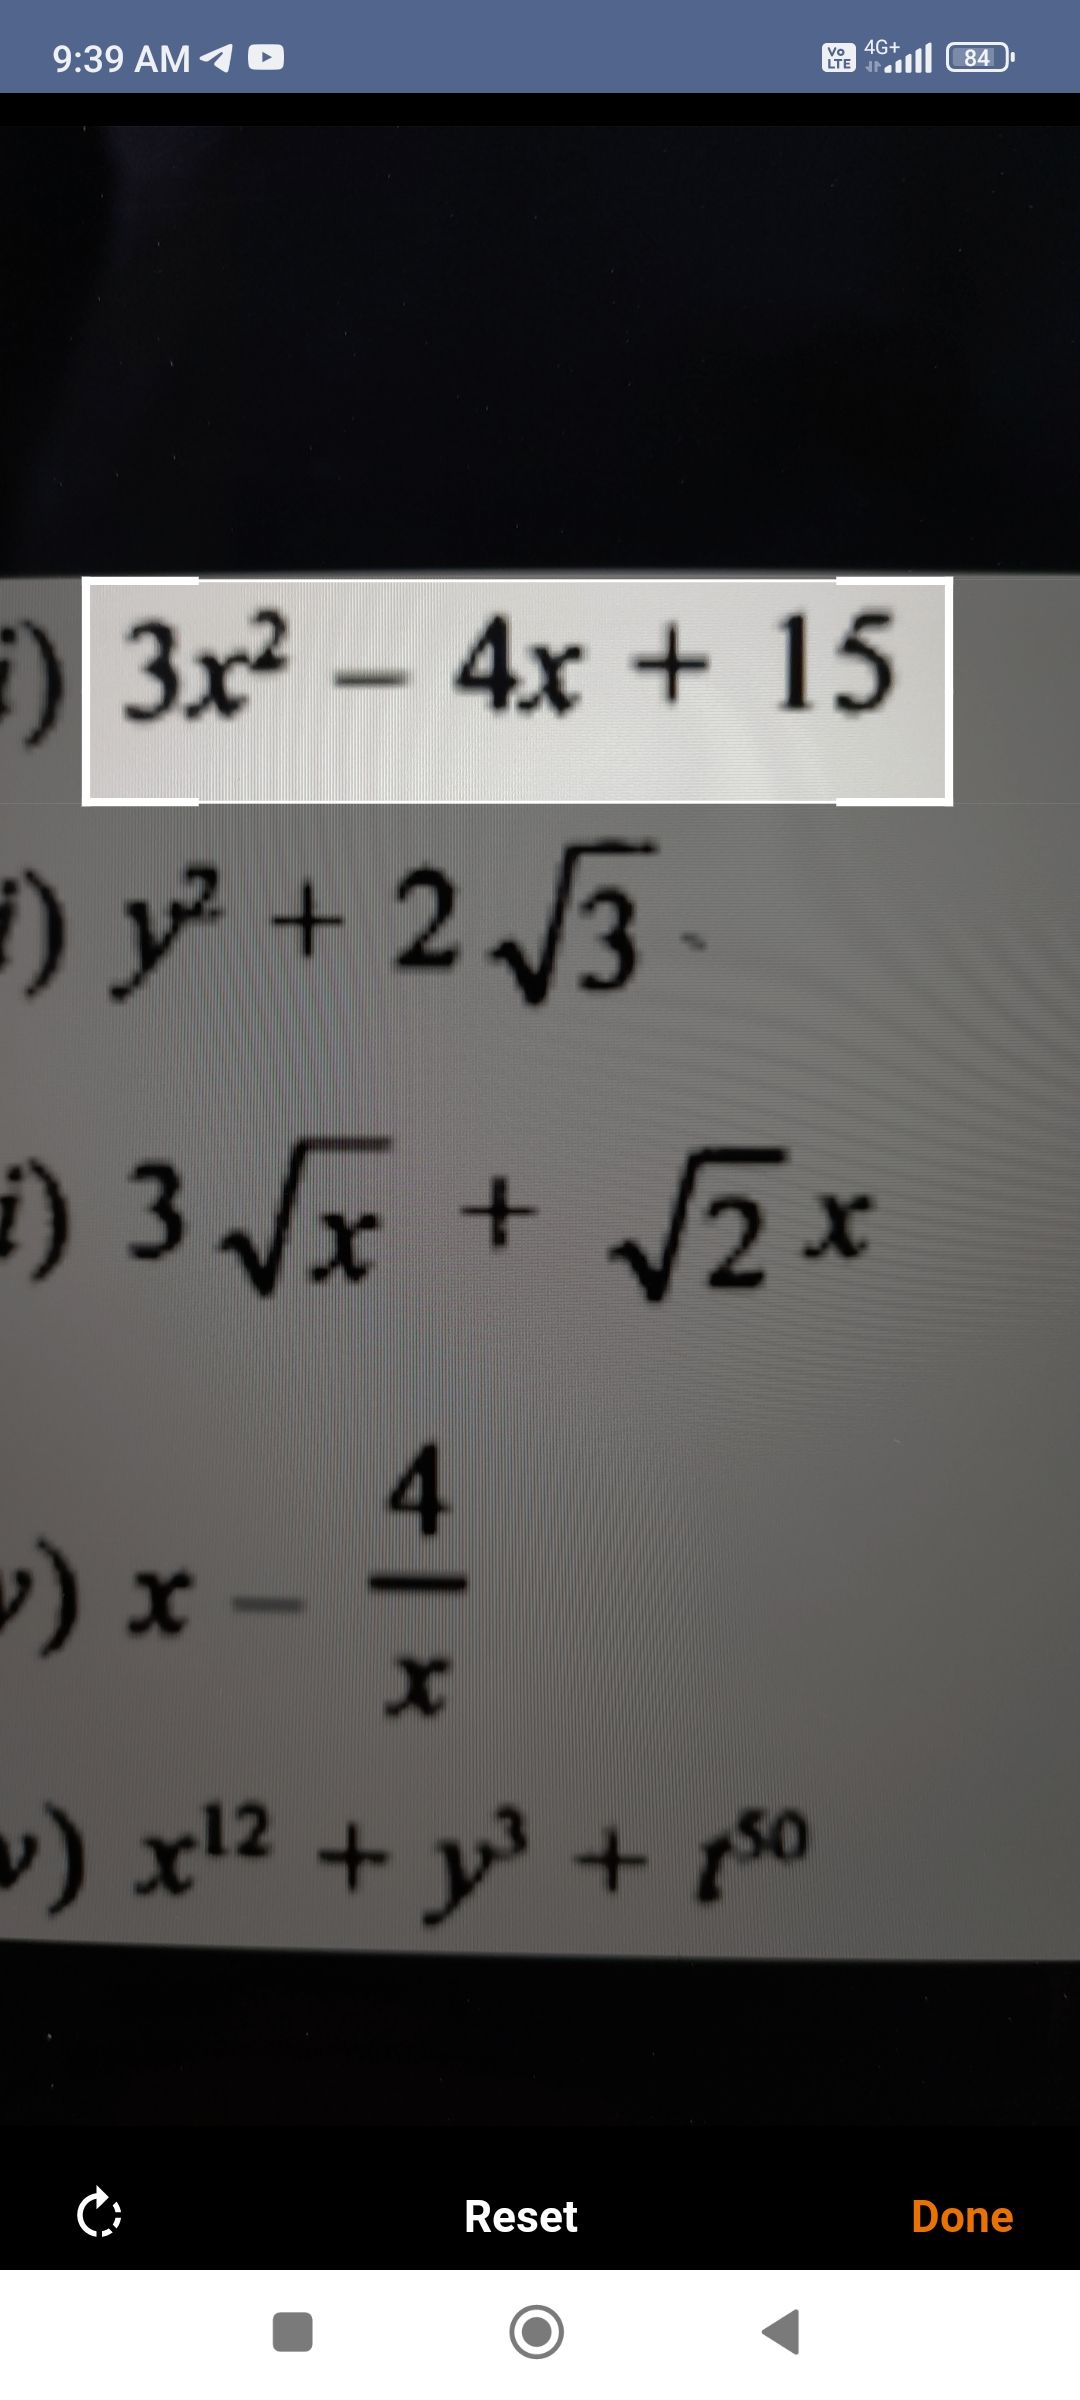 Mathway app scanning an equation